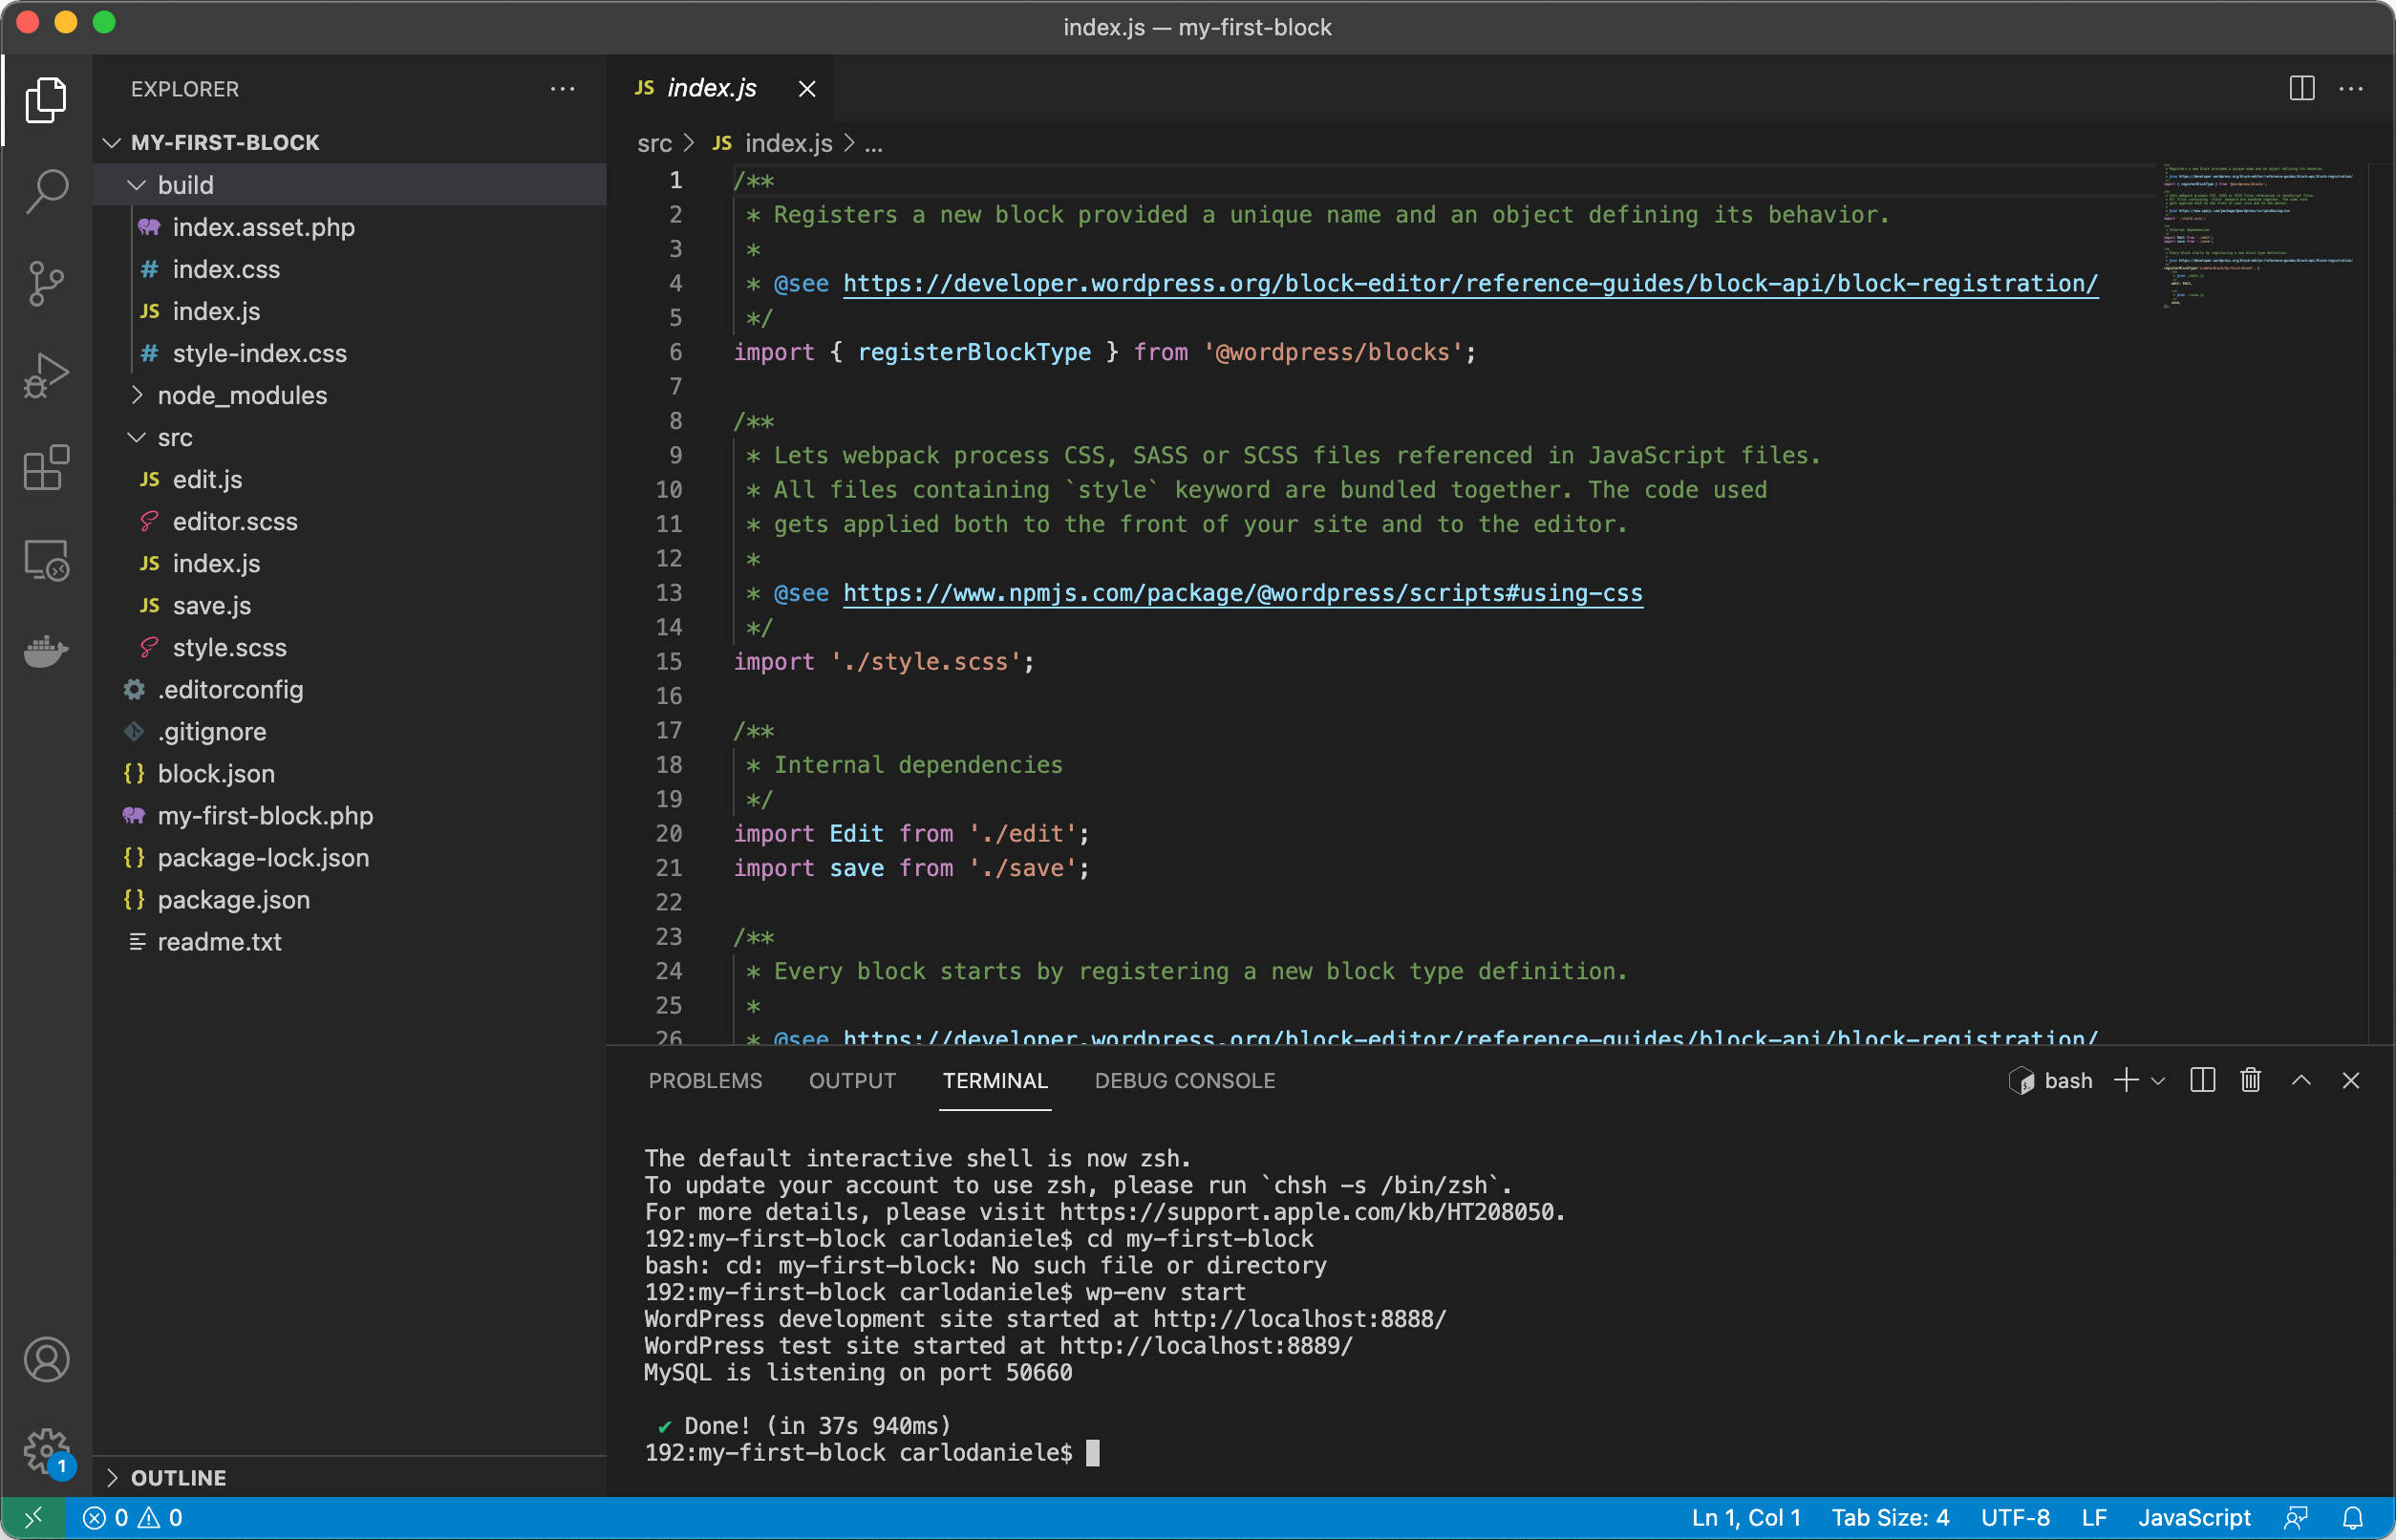 Executando comandos a partir do Visual Studio Code Terminal